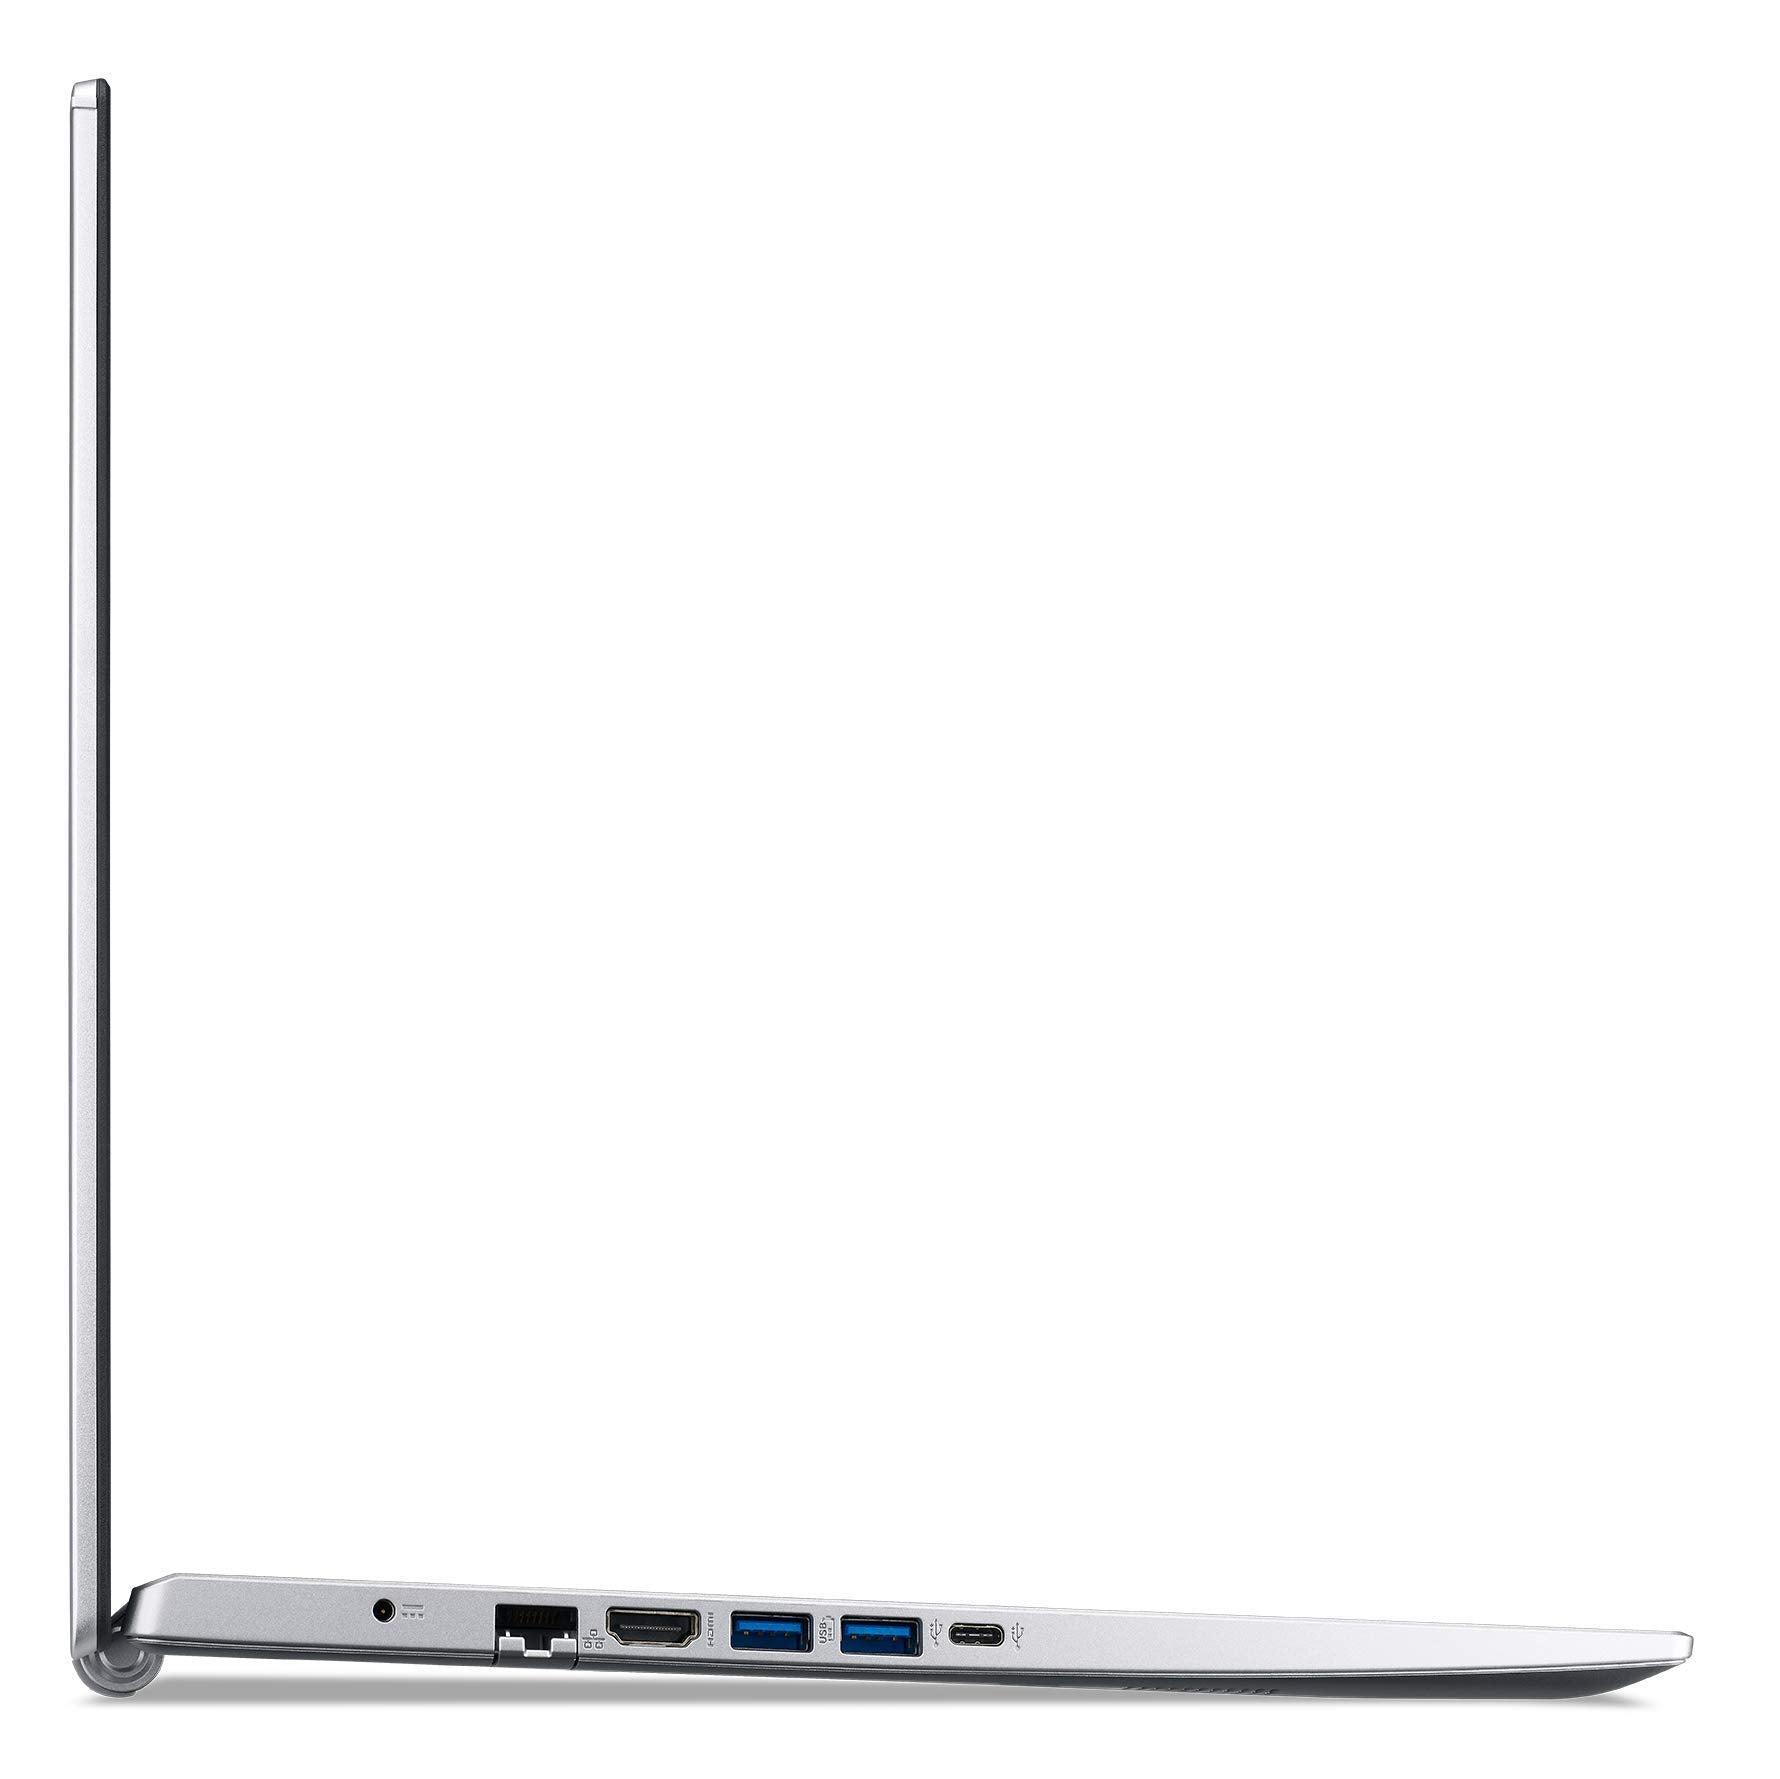 Acer Aspire 5 A517-52-75N6 Laptop | 17.3" Full HD IPS Display | 11th Gen Intel Core i7-1165G7 | Intel Iris Xe Graphics | 16GB DDR4 | 512GB SSD | WiFi 6 | Fingerprint Reader | BL Keyboard | Windows 11